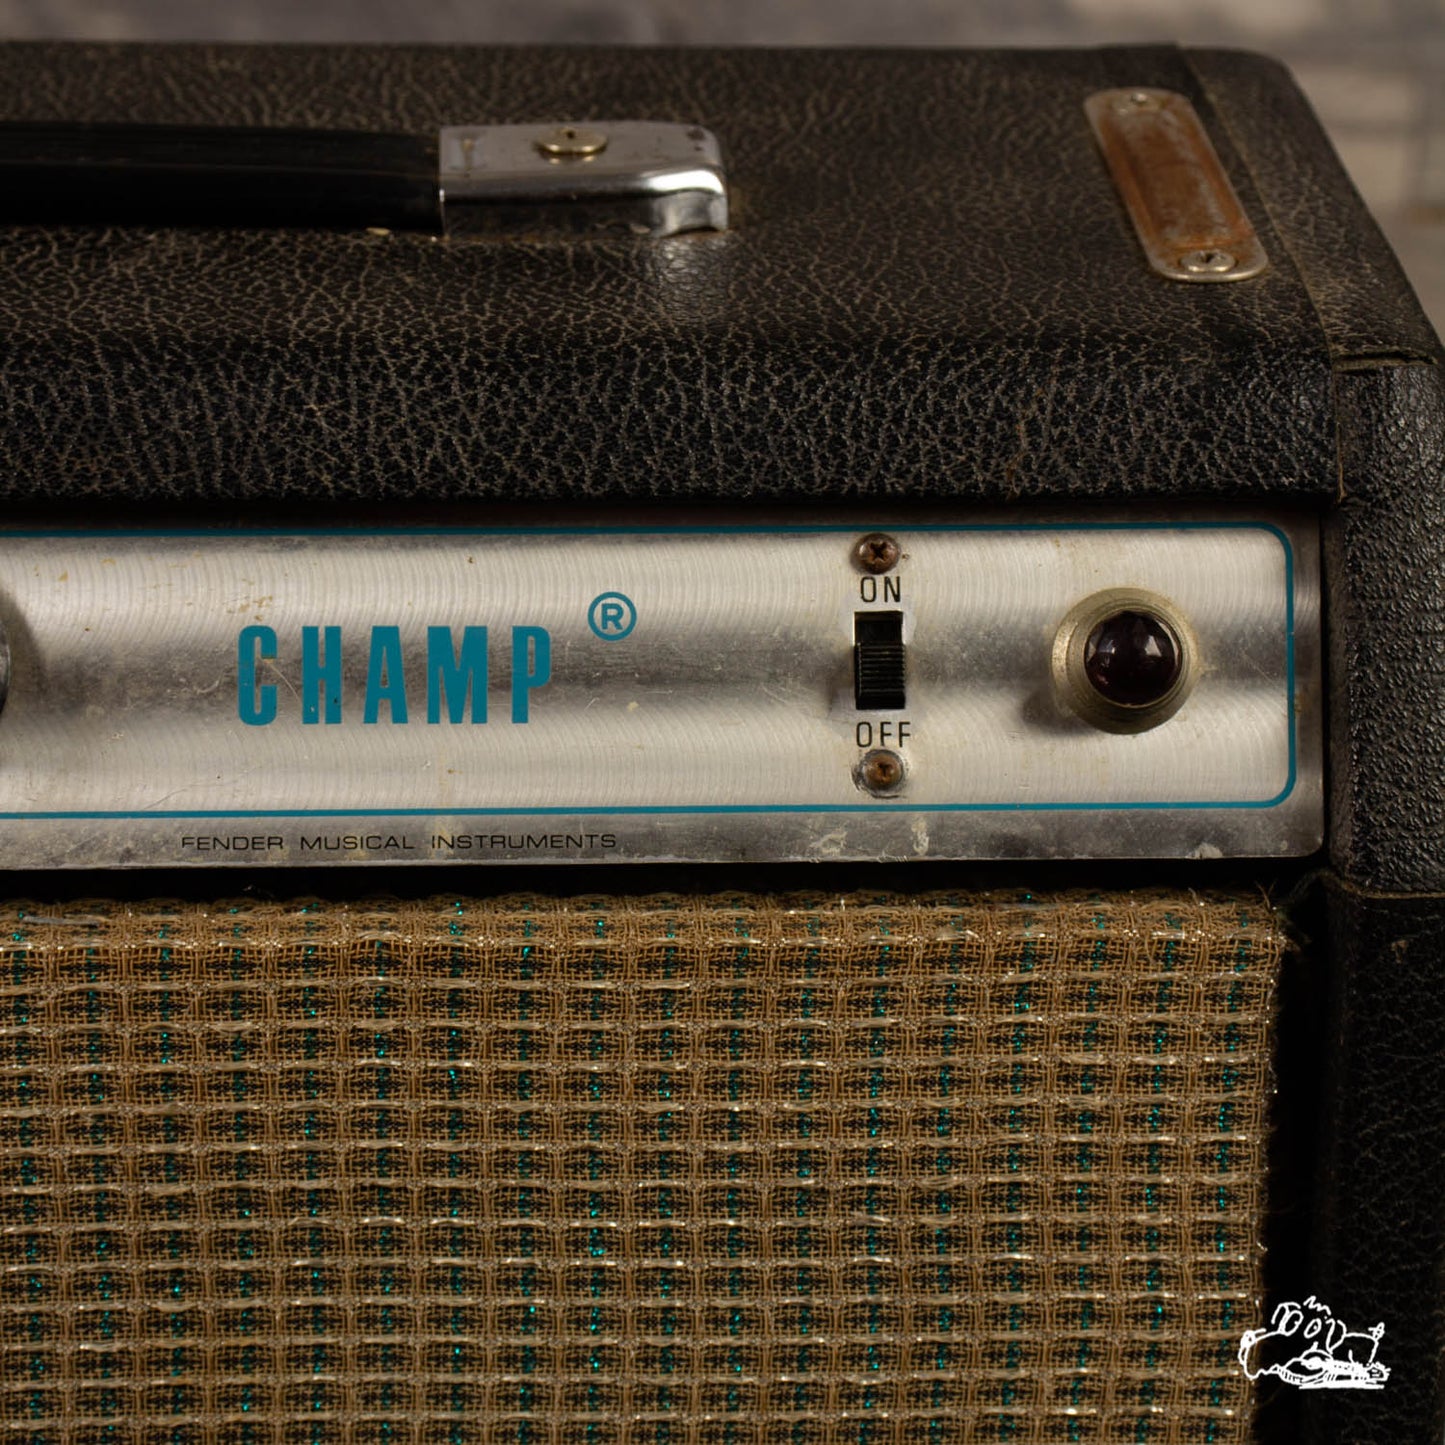 1972 Fender Champ Amplifier